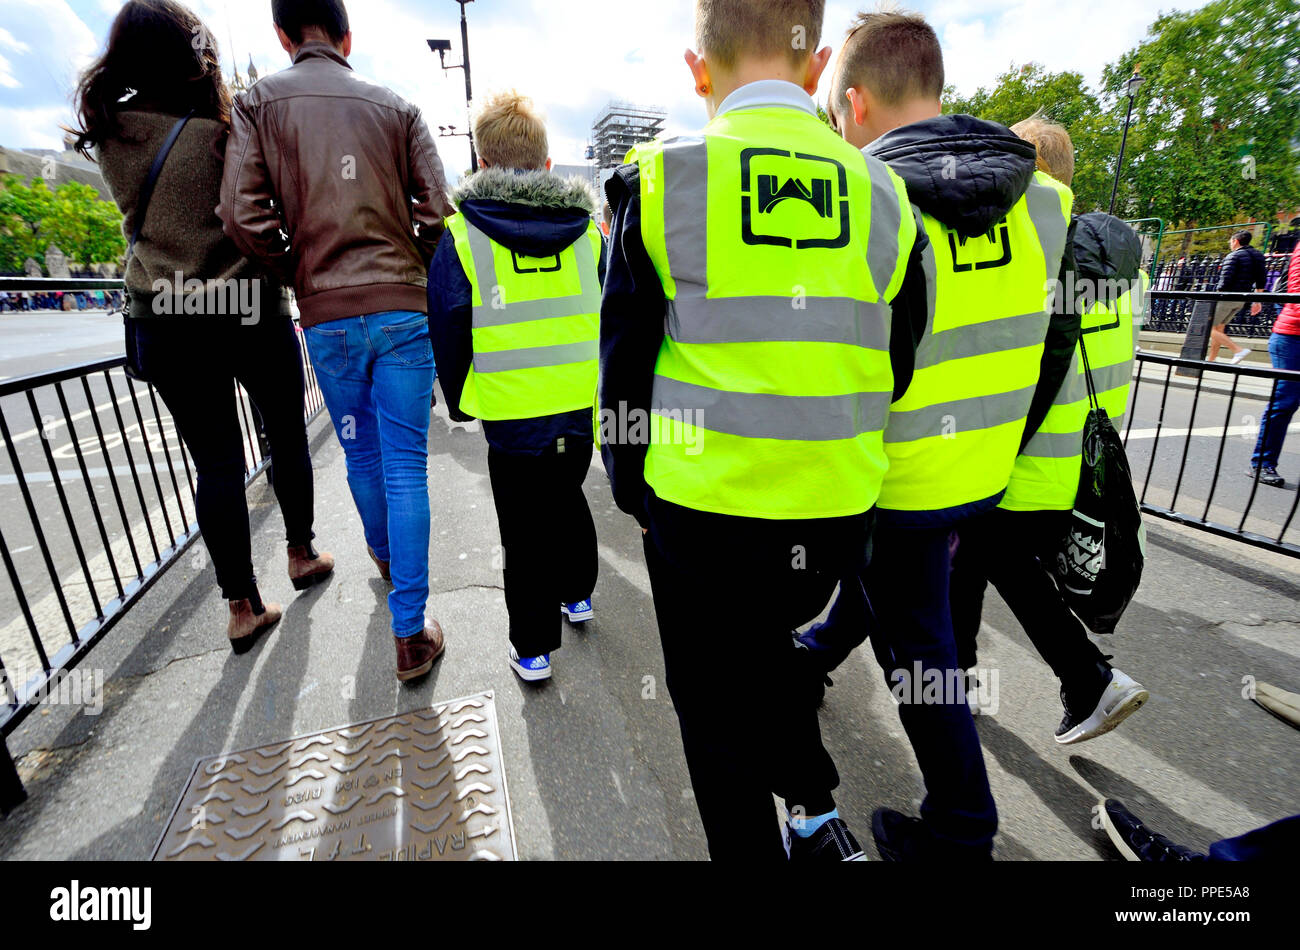 Schoolchildren in hi-vis vests on a school trip, Parliament Square, London, England, UK. Stock Photo